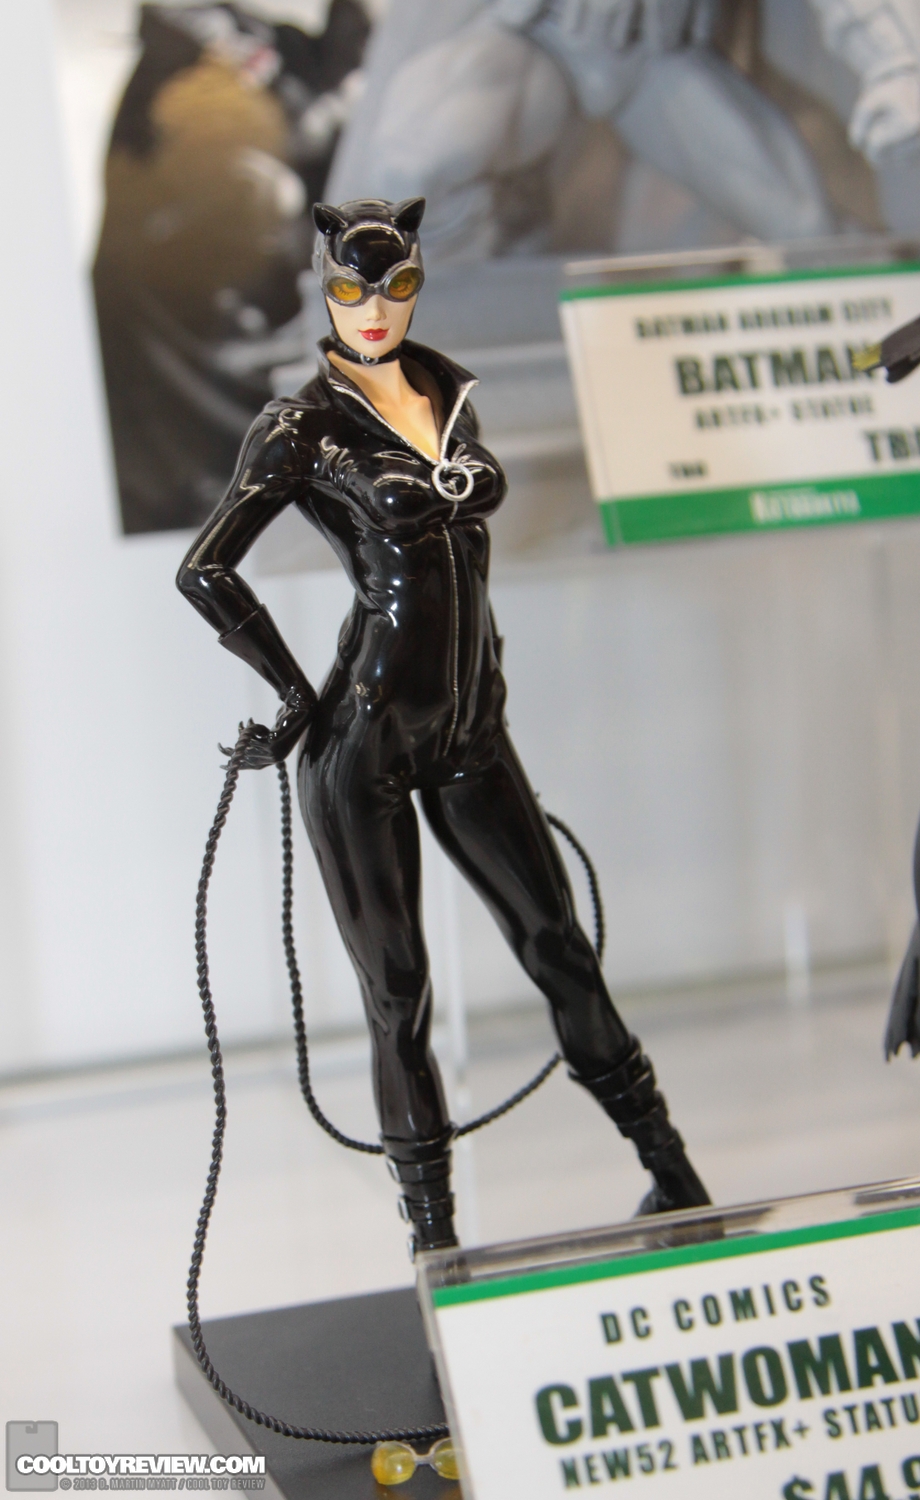 Kotobuliya Catwoman Statue